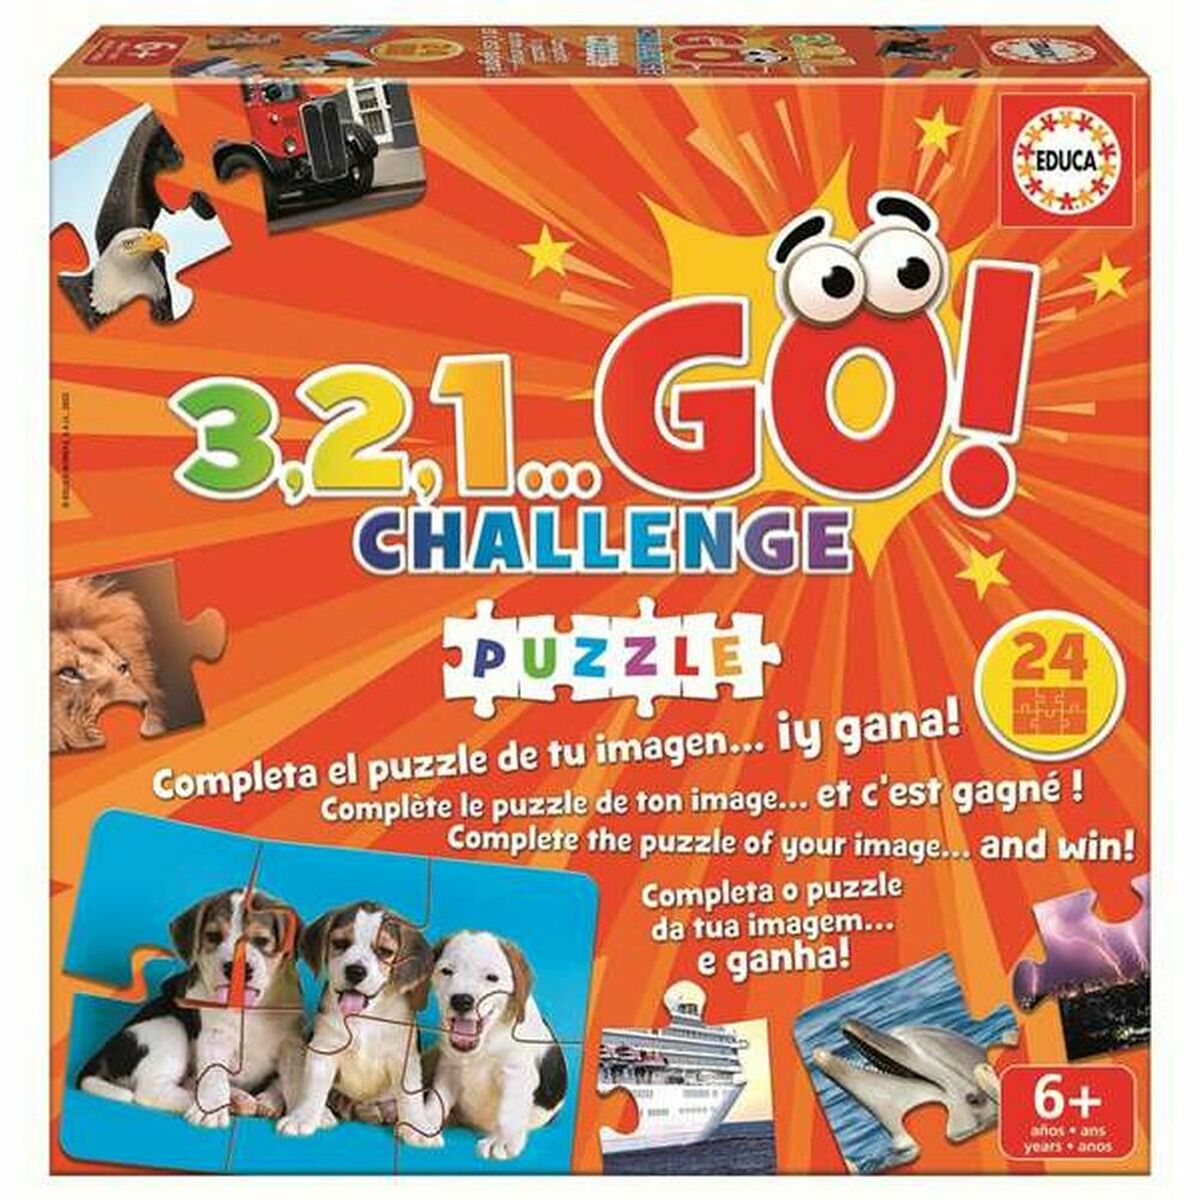 Bordspel Educa 3,2,1..Challenge Puzzle